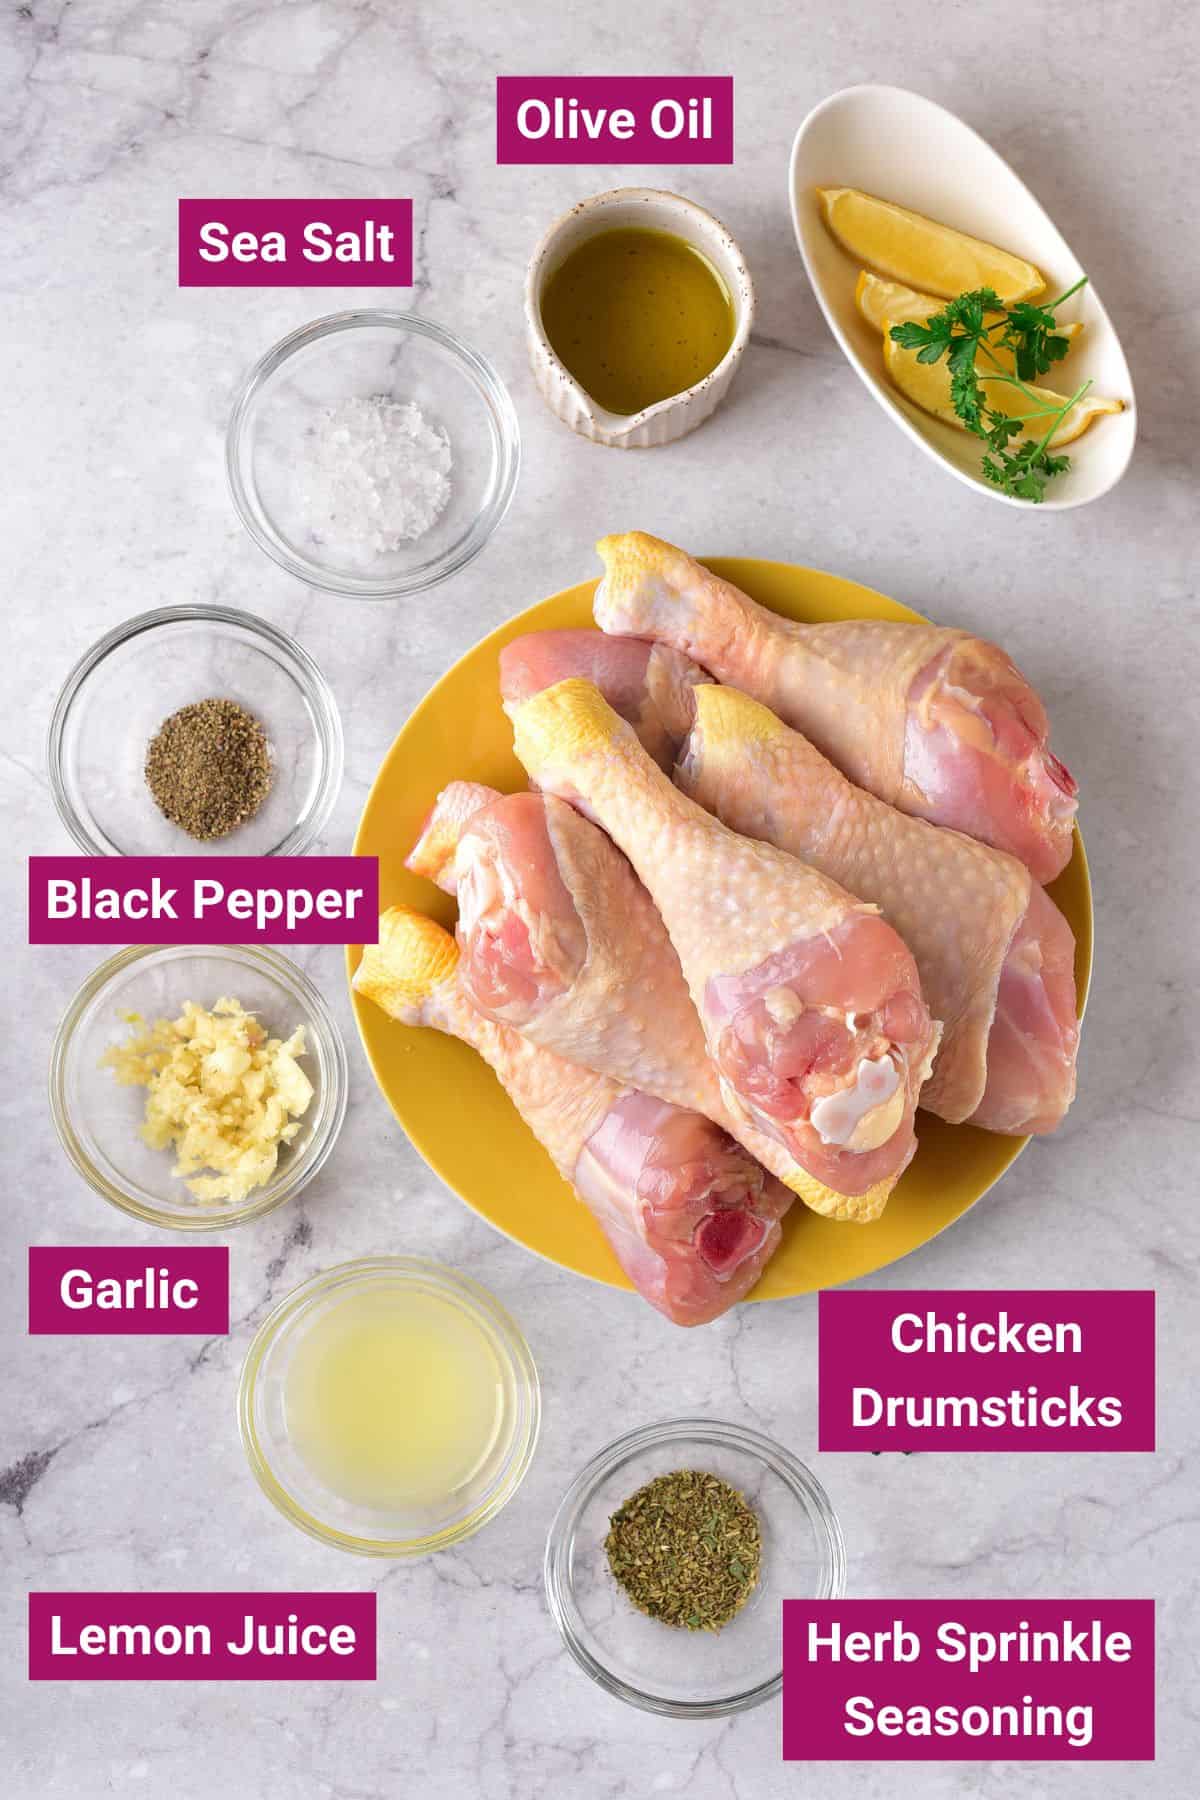 salt, black pepper, olive oil, garlic, lemon juice, chicken drumsticks and herb seasoning on separate bowls